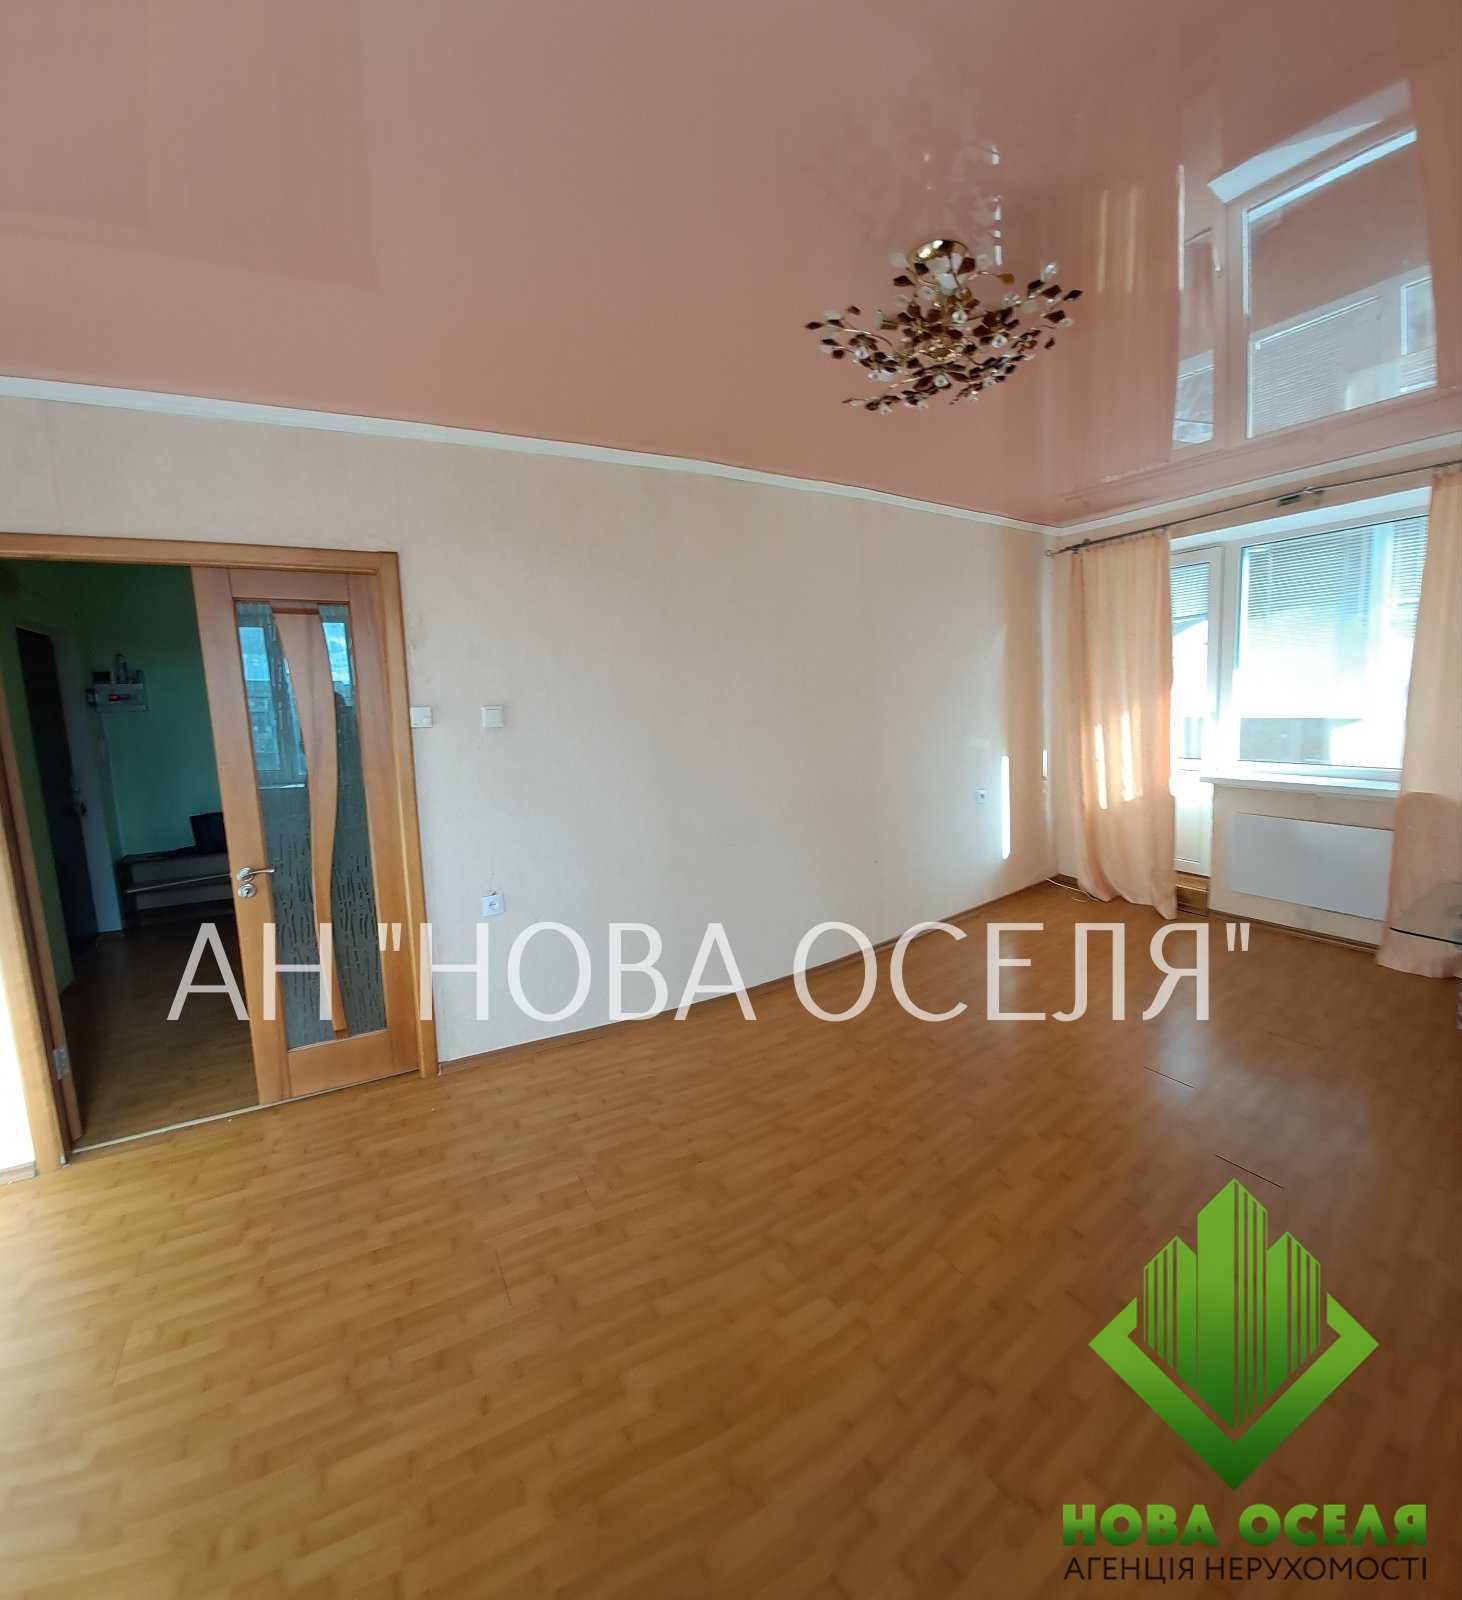 Продам простору, сонячну квартиру , р-н ближне Жадова, АТБ.